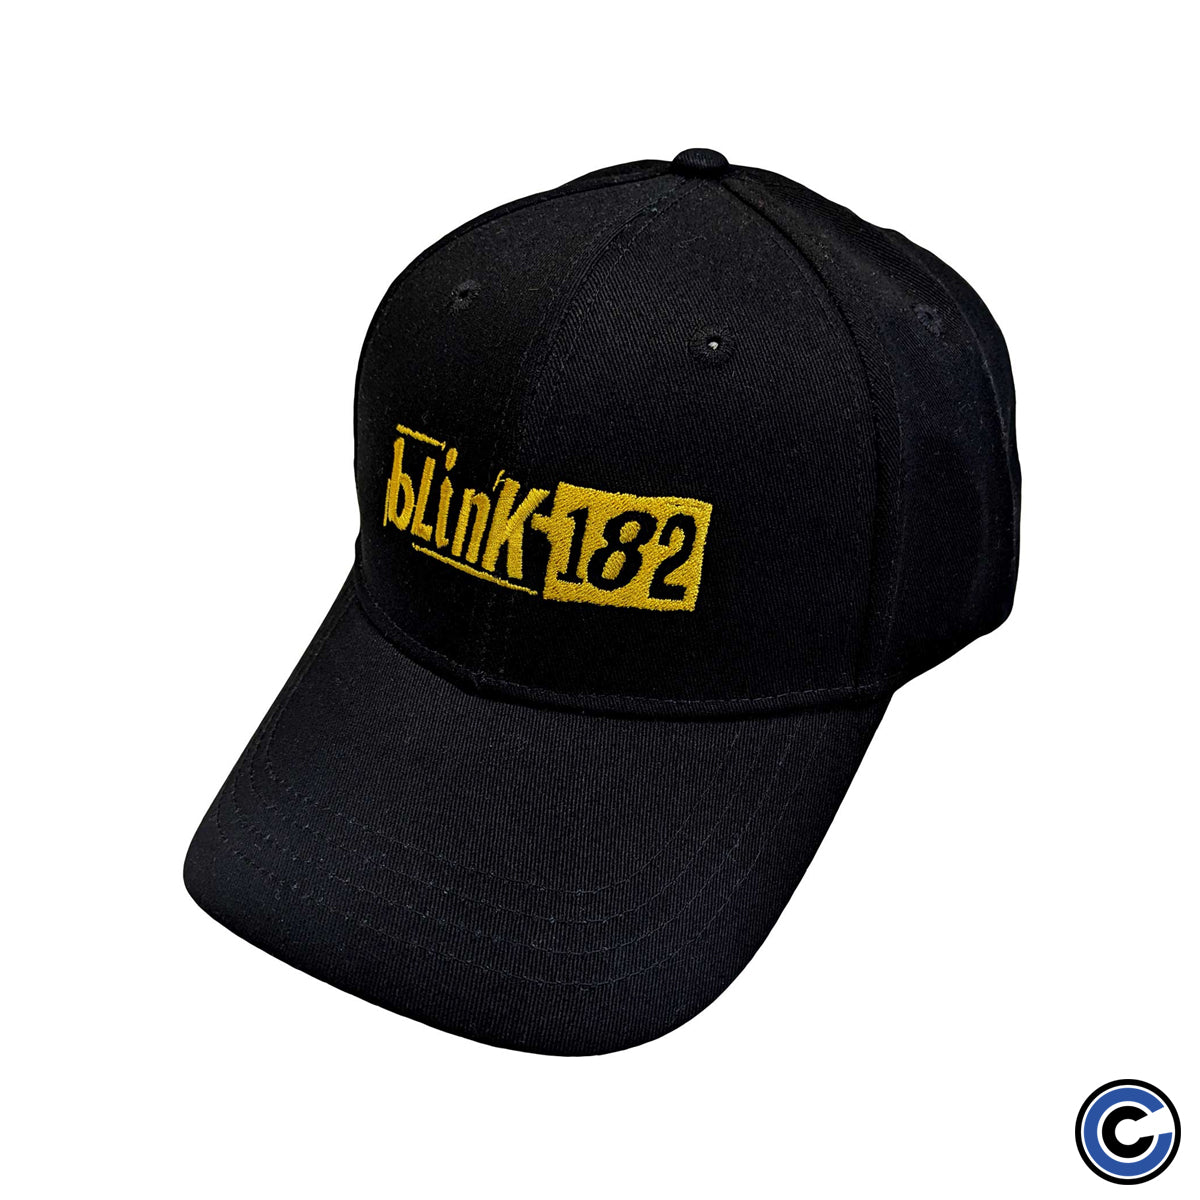 Blink-182 "Logo" Hat